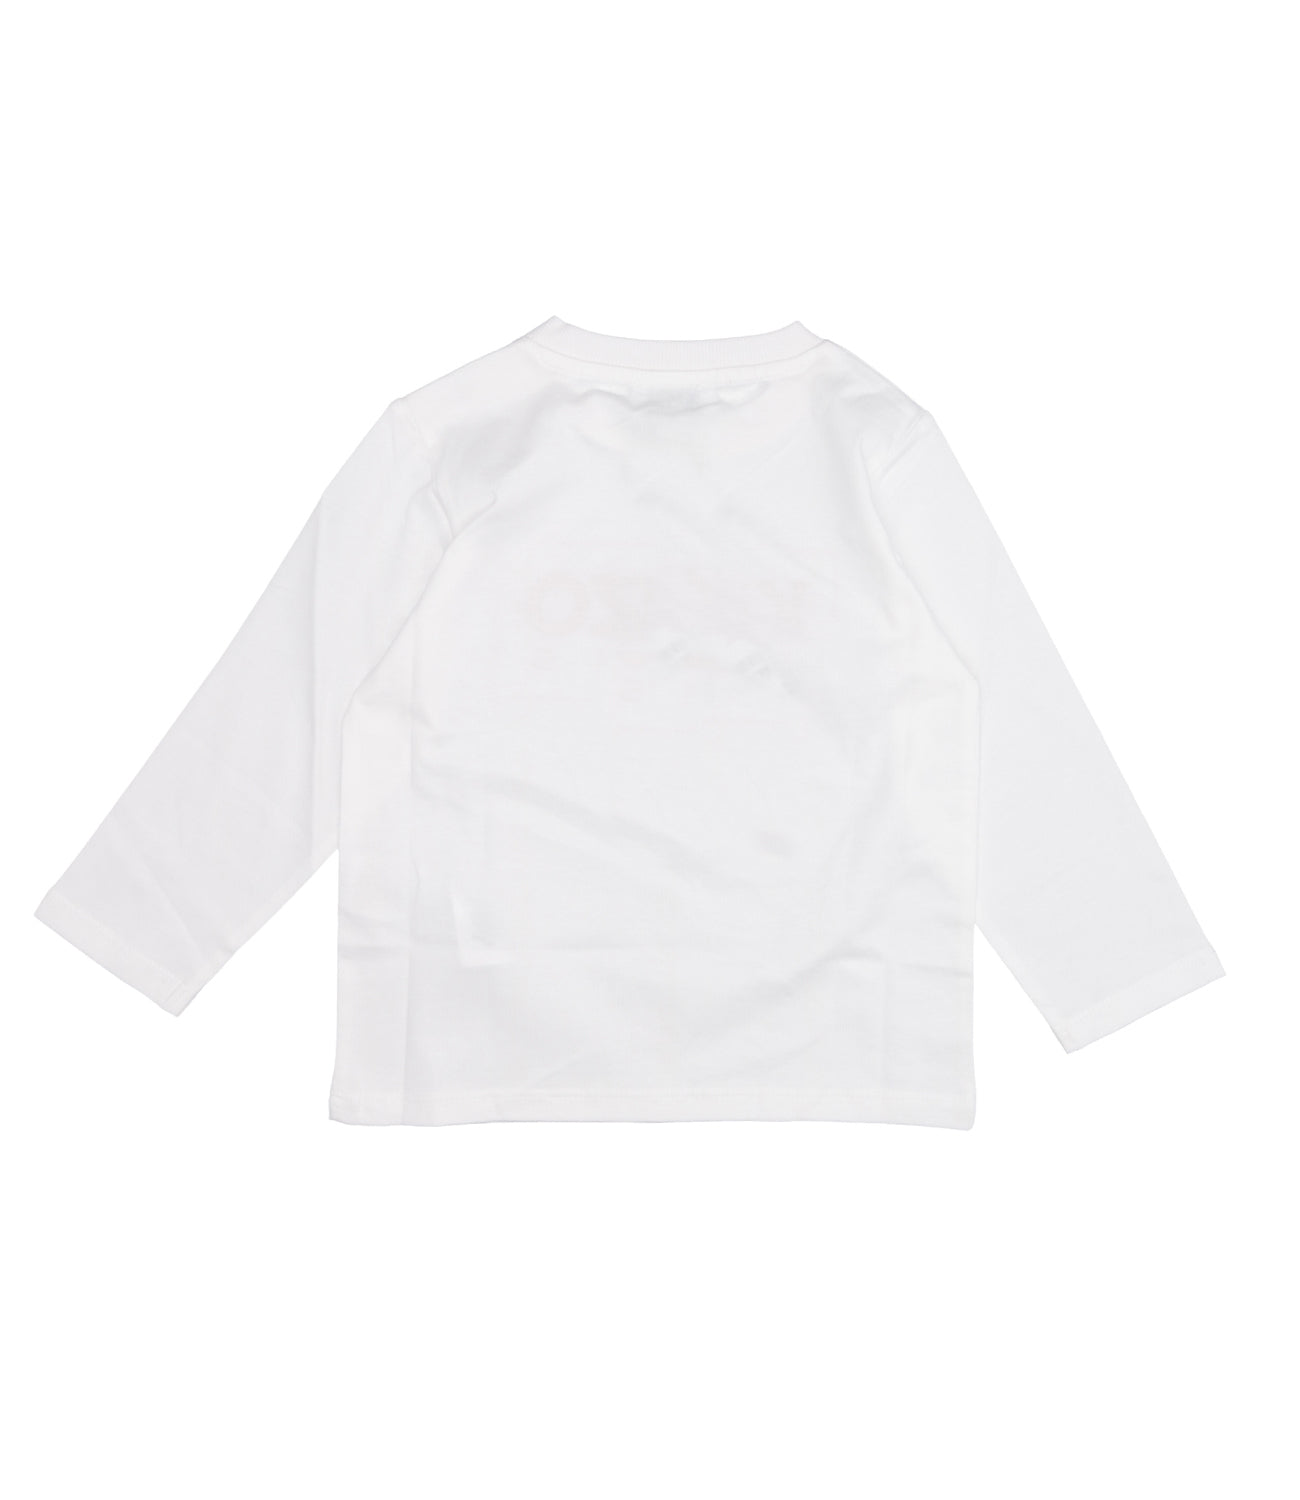 Kenzo Kids | T-Shirt Bianco e Arancio